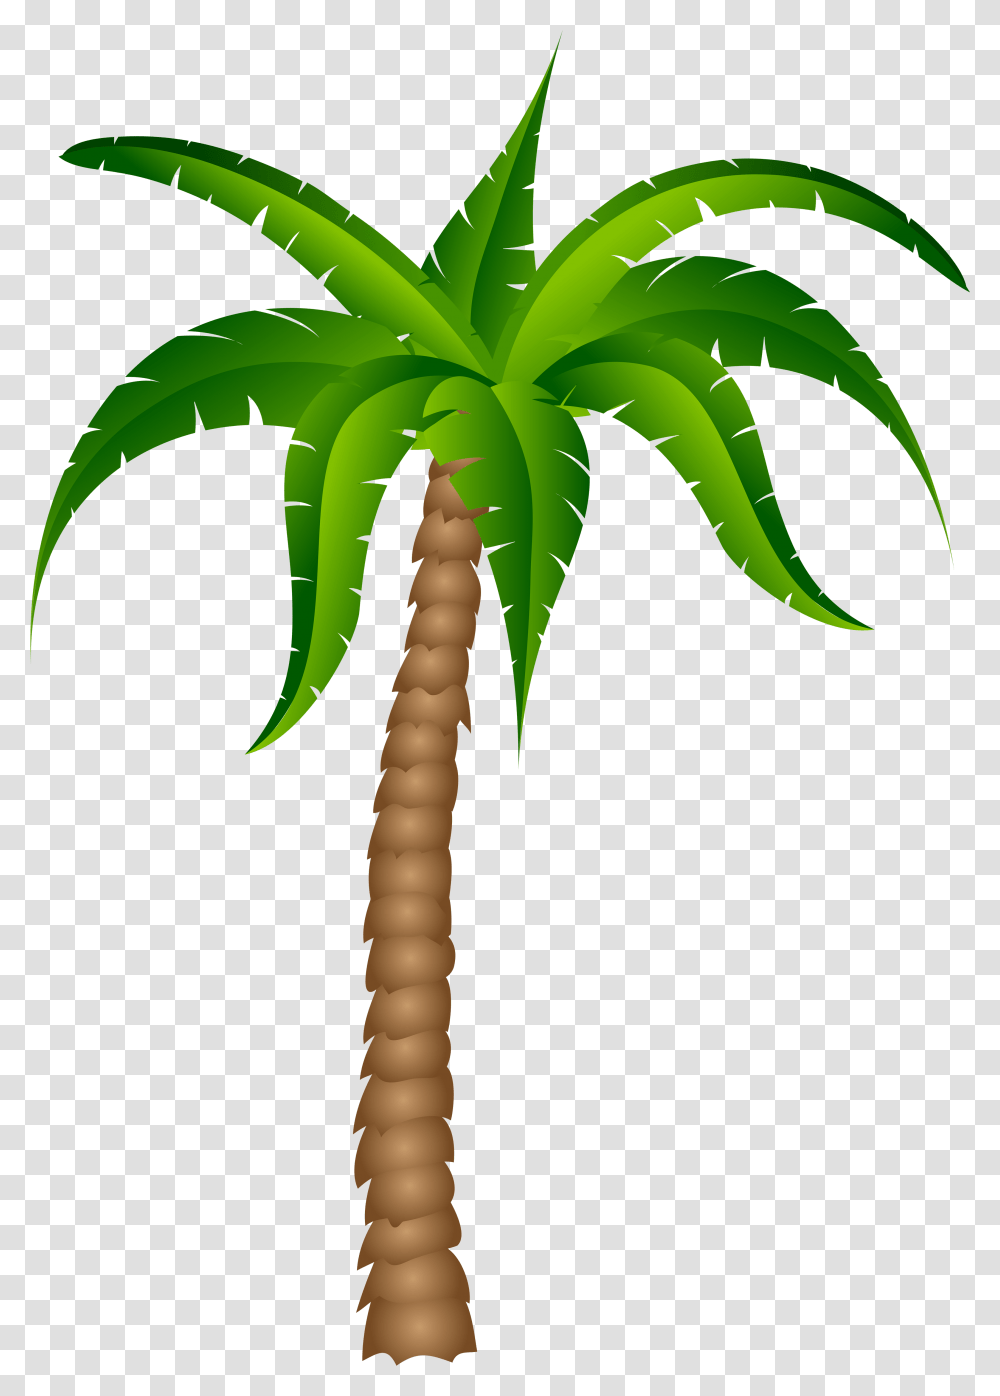 Free Palm Trees Download Clip Art Palm Trees Clip Art, Banana, Fruit, Plant, Food Transparent Png